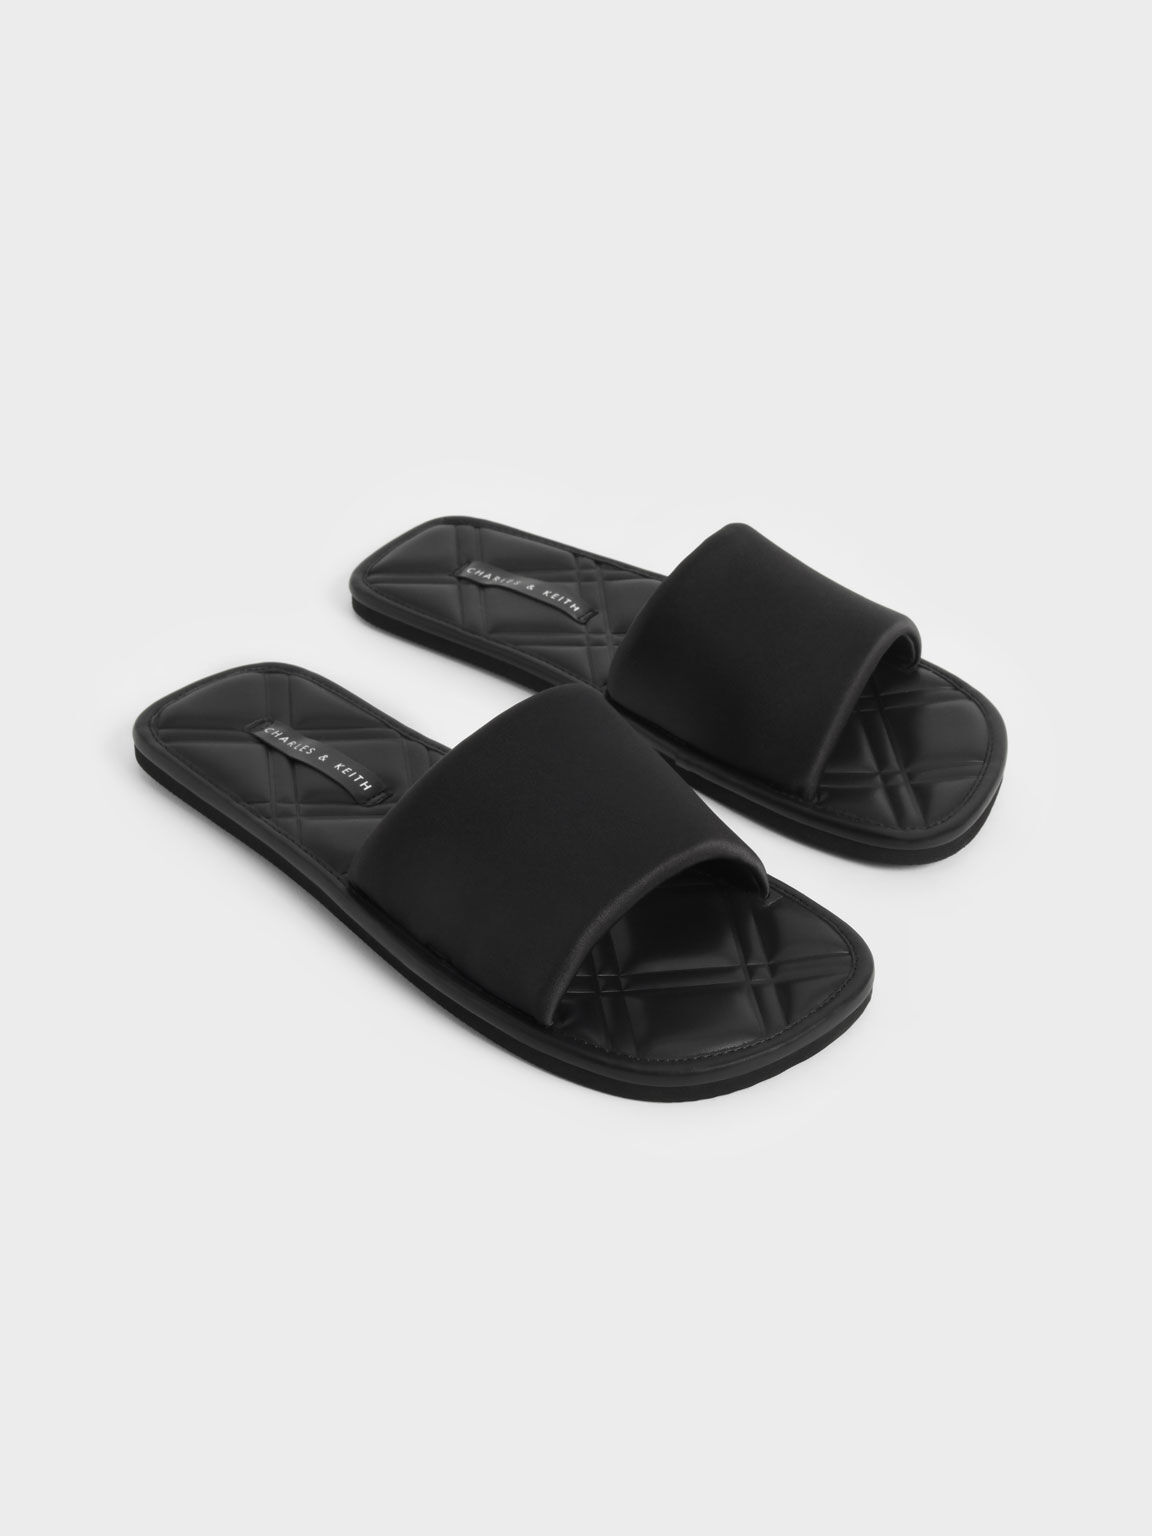 Sandal slides Satin Padded, Black, hi-res